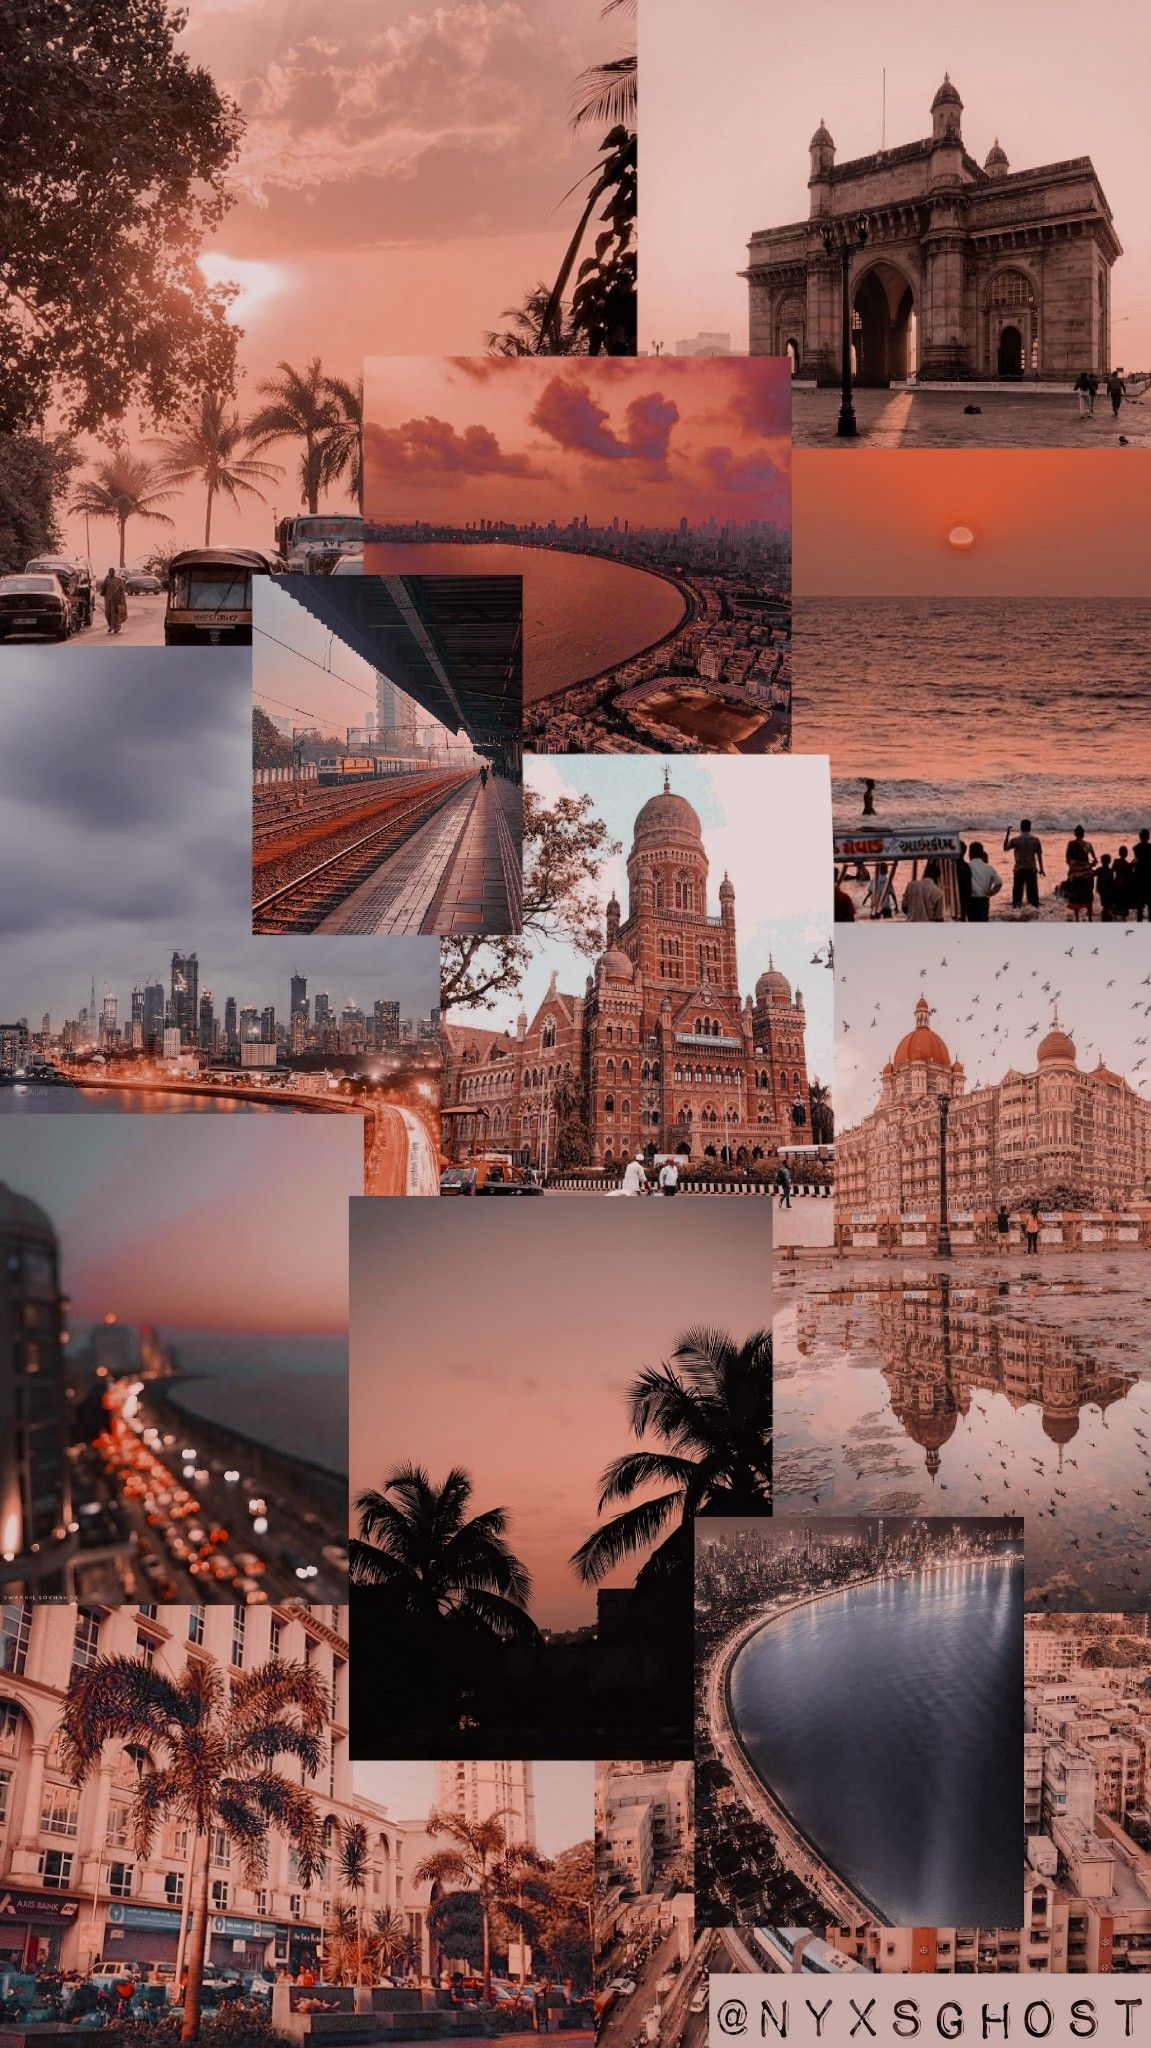 Mumbai aesthetic wallpaper sfondi vintage sfondi estivi bellissimi sfondi